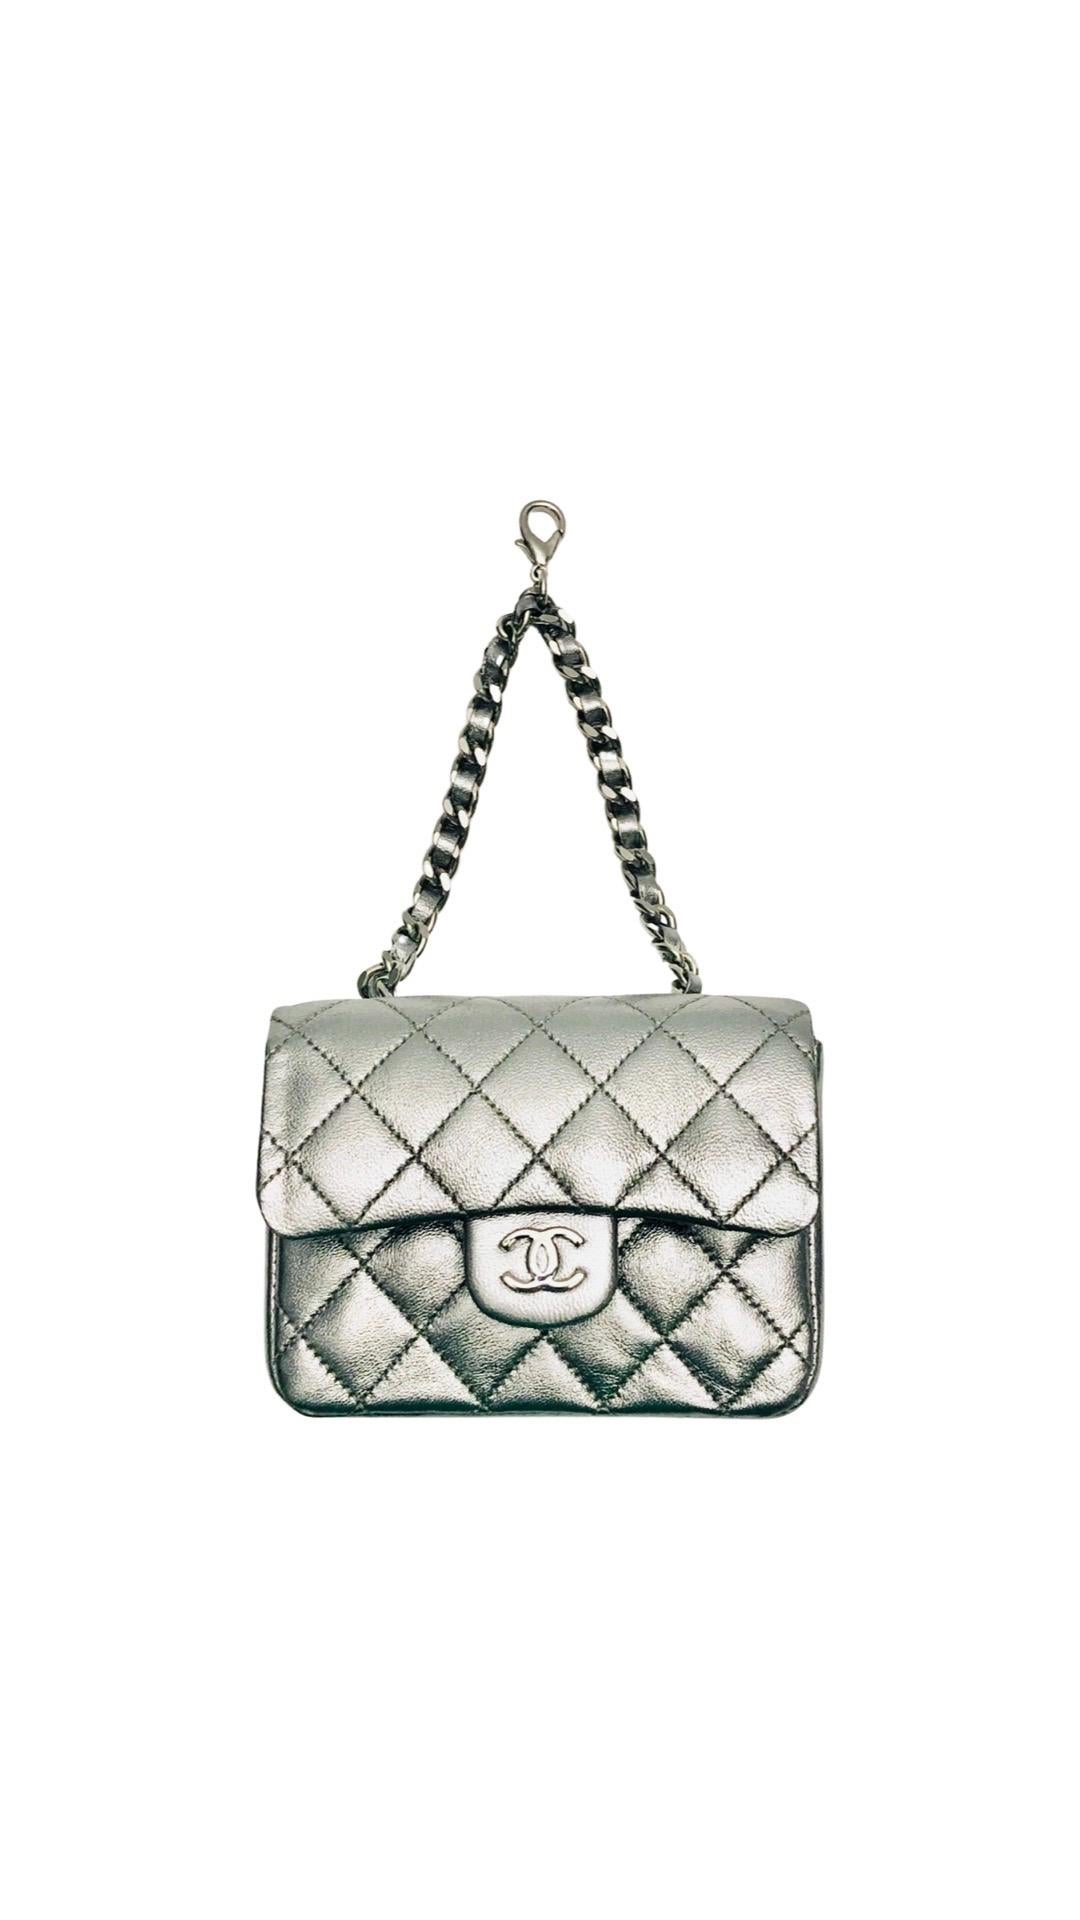 Unused Chanel Silver Metallic Leather Micro Mini Chain Belt Bag For Sale 2